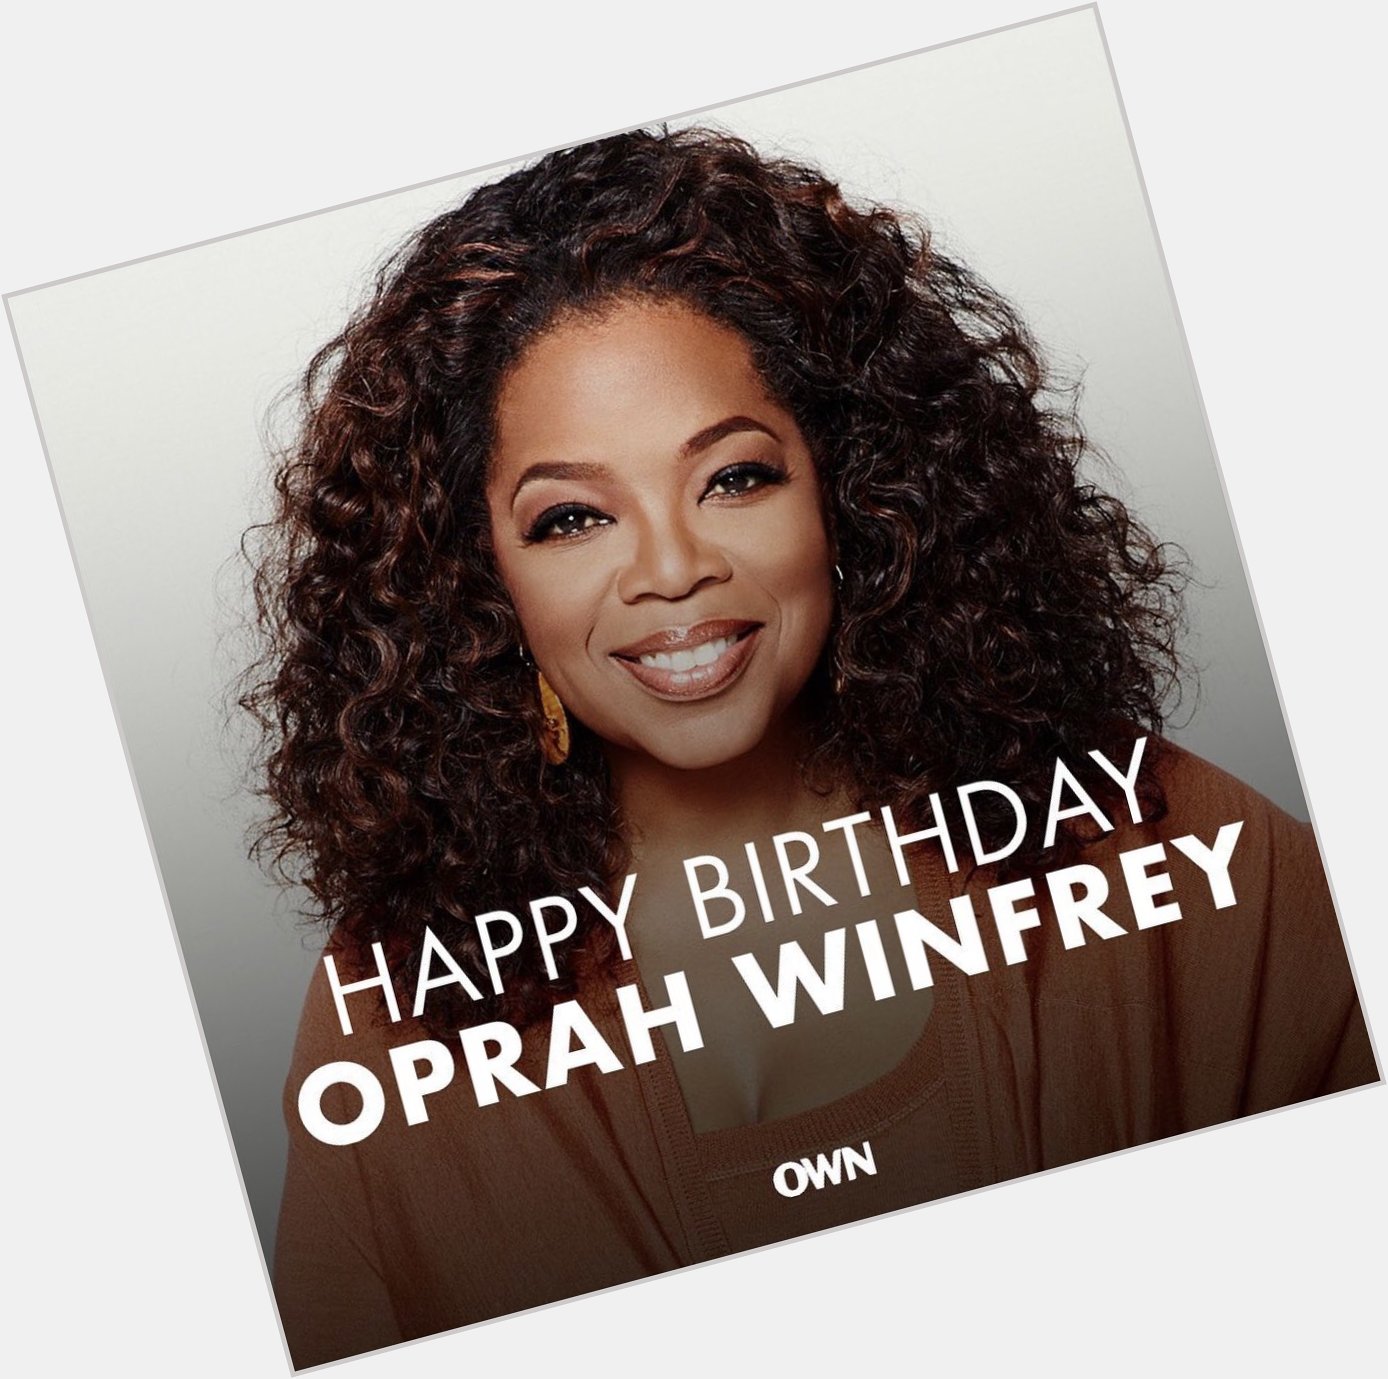 Wishing the wonderful Oprah Winfrey a happy and joy-filled 67th birthday 